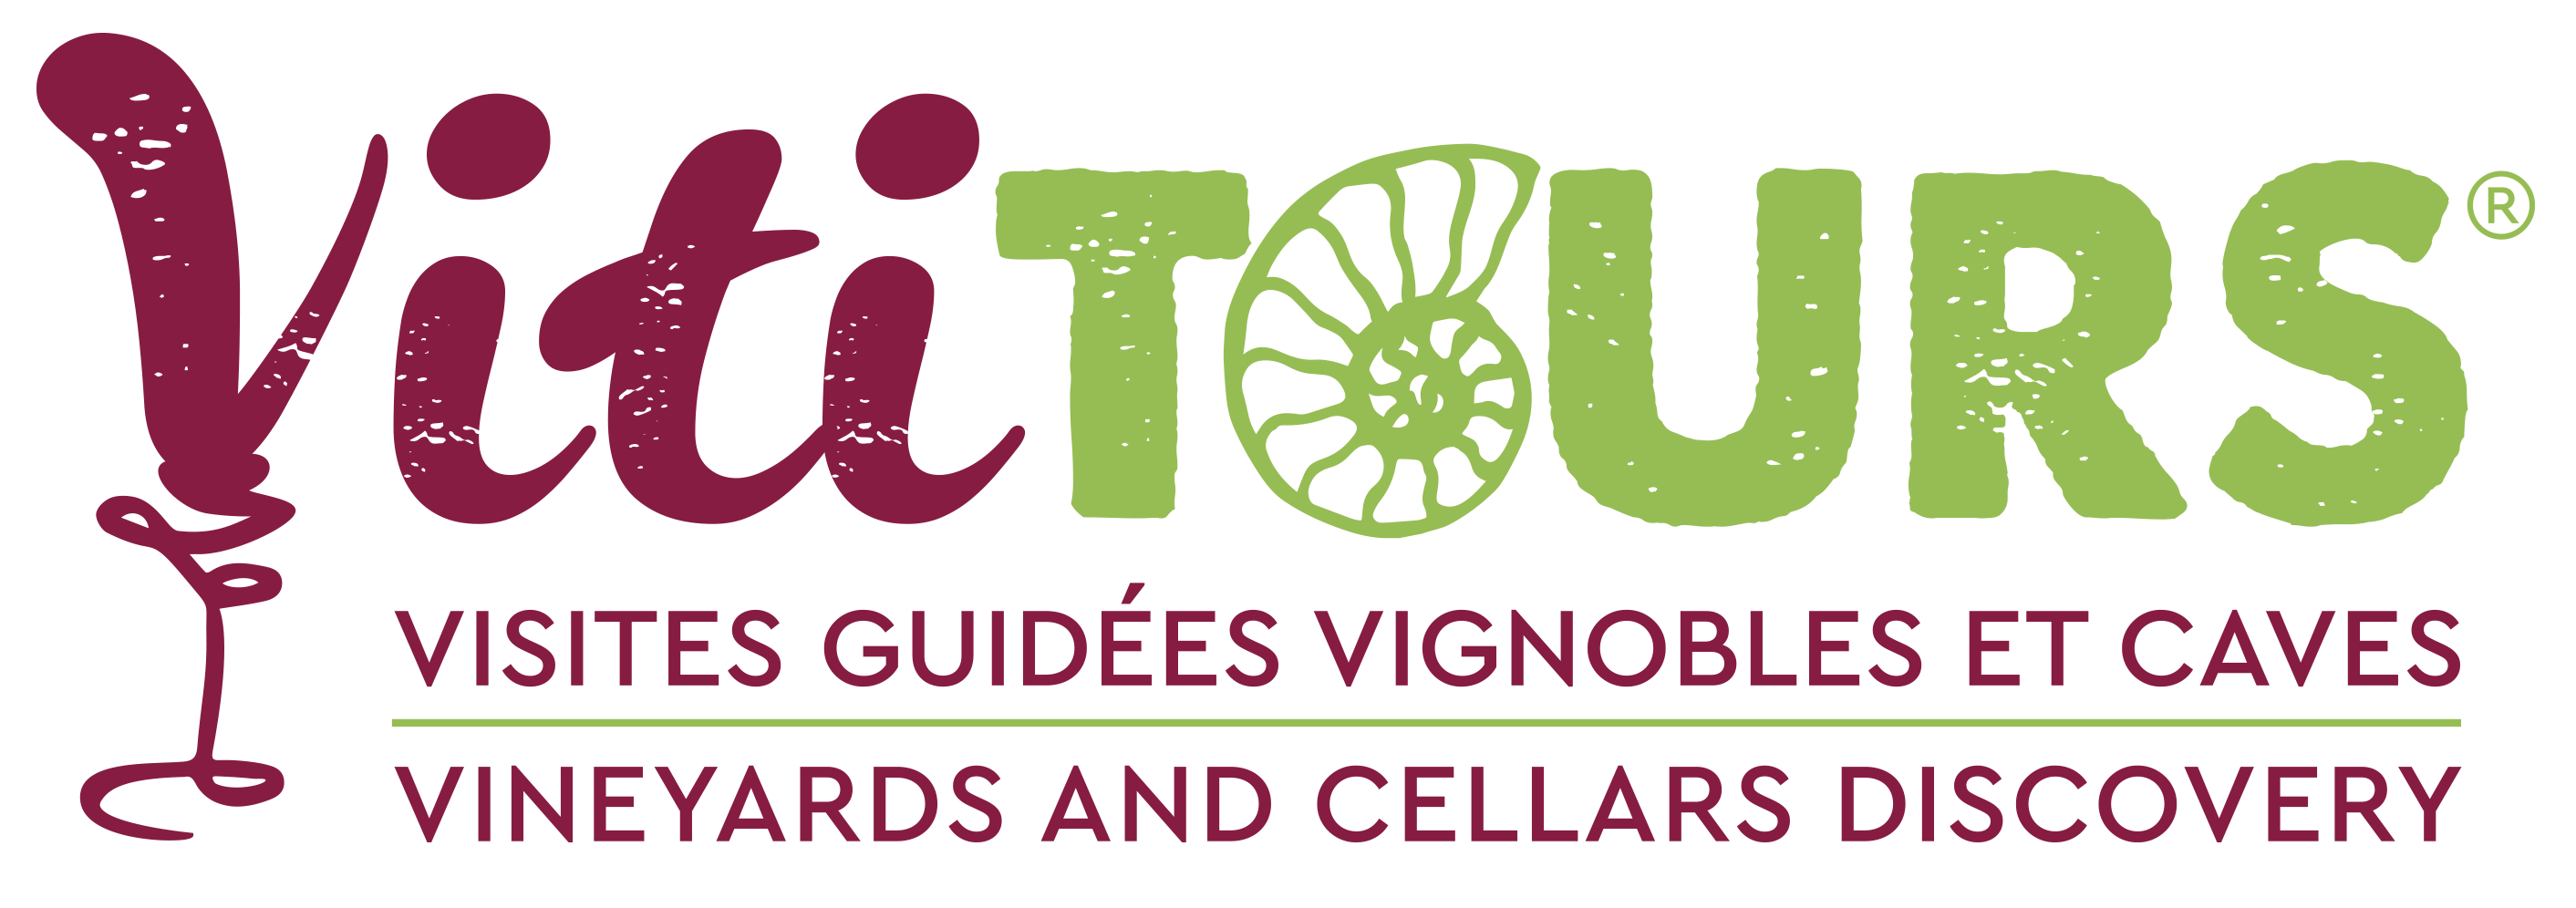 Logo Vititours